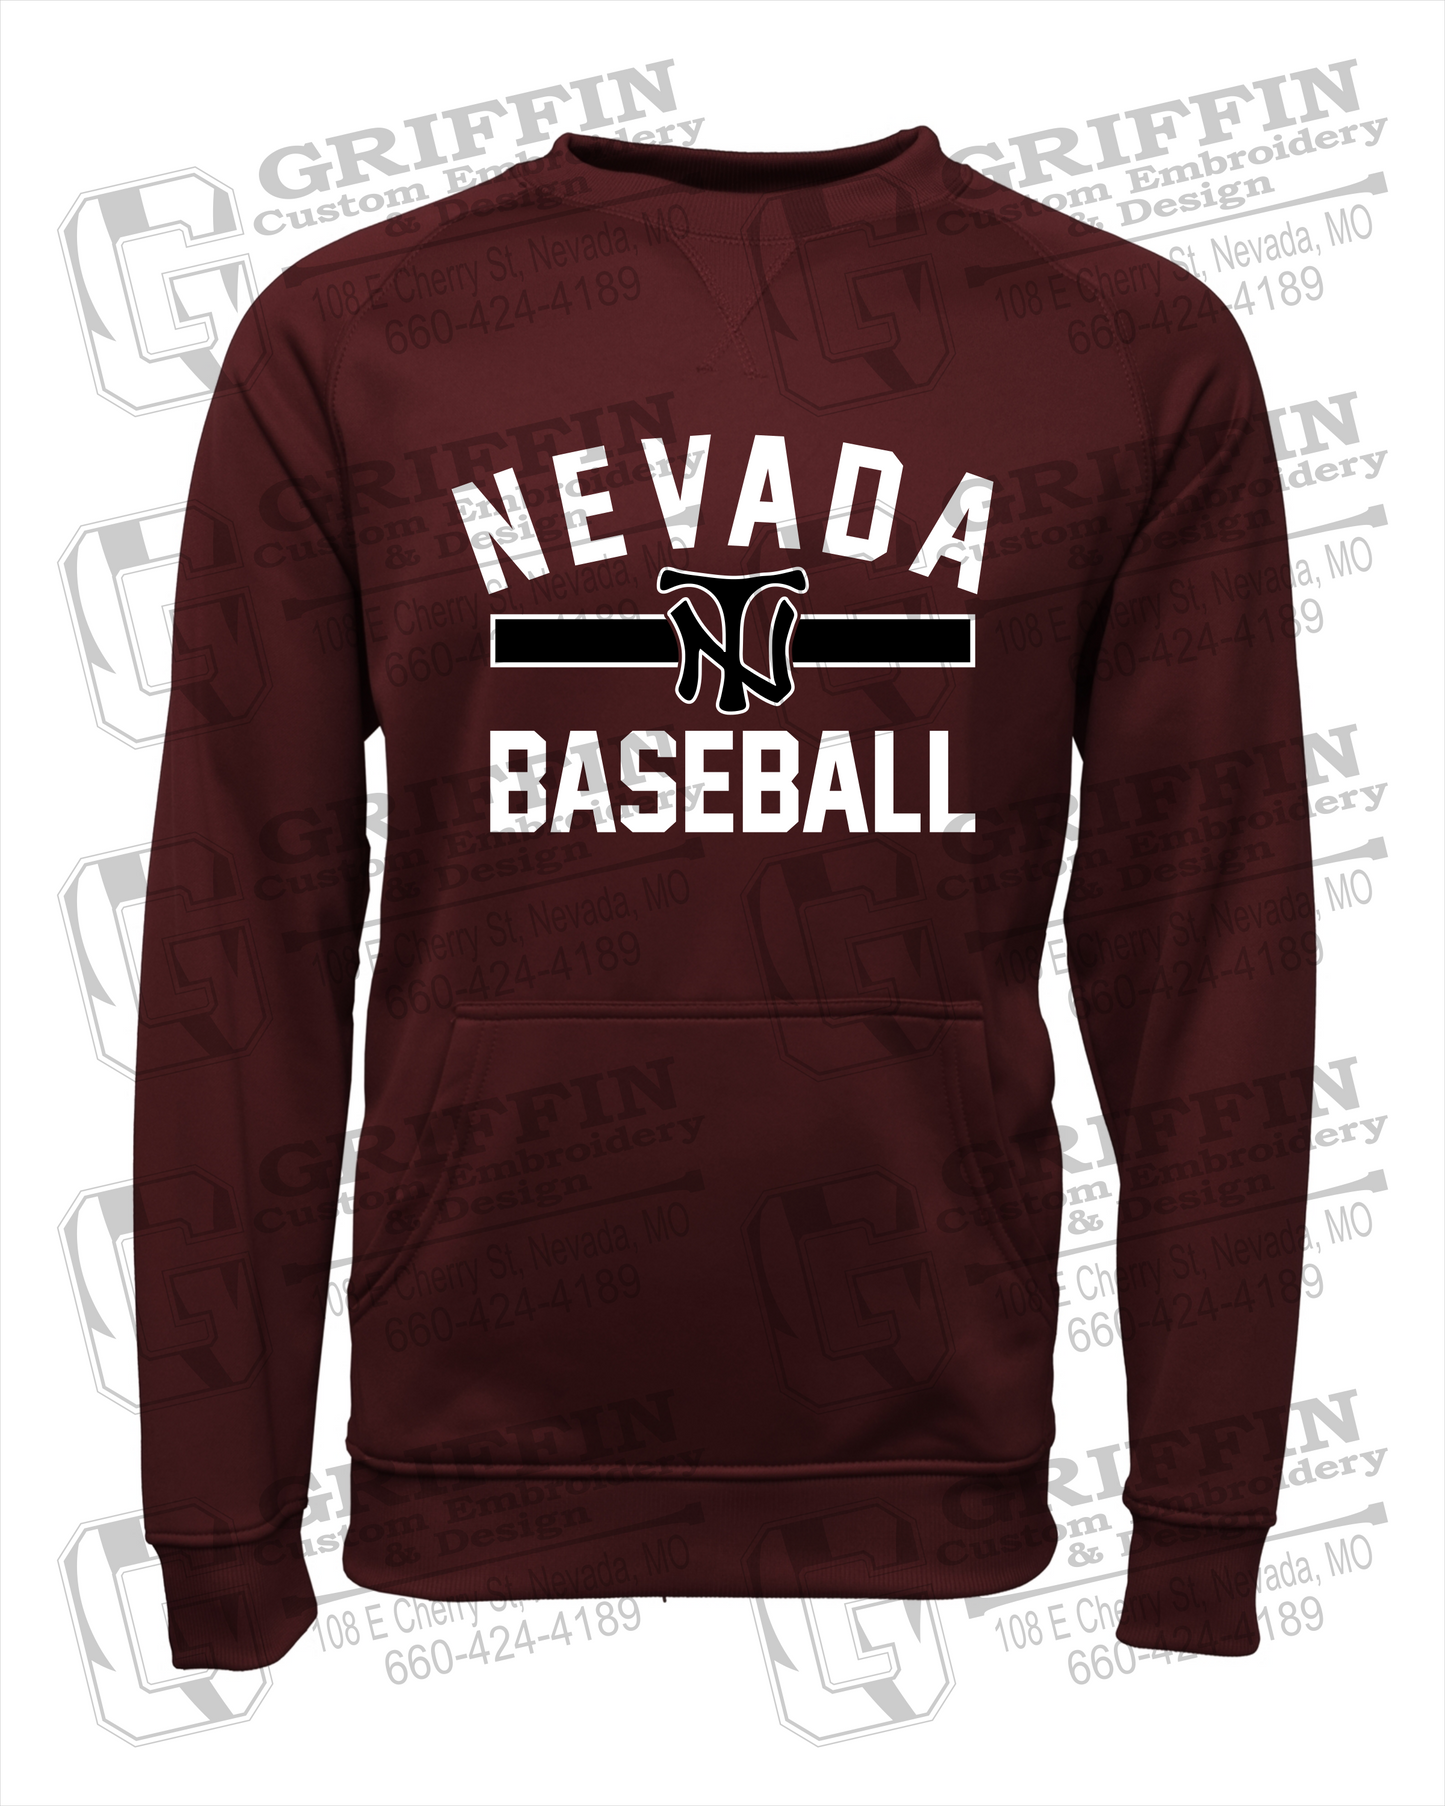 Nevada Tigers 24-Z Youth Sweatshirt - Baseball